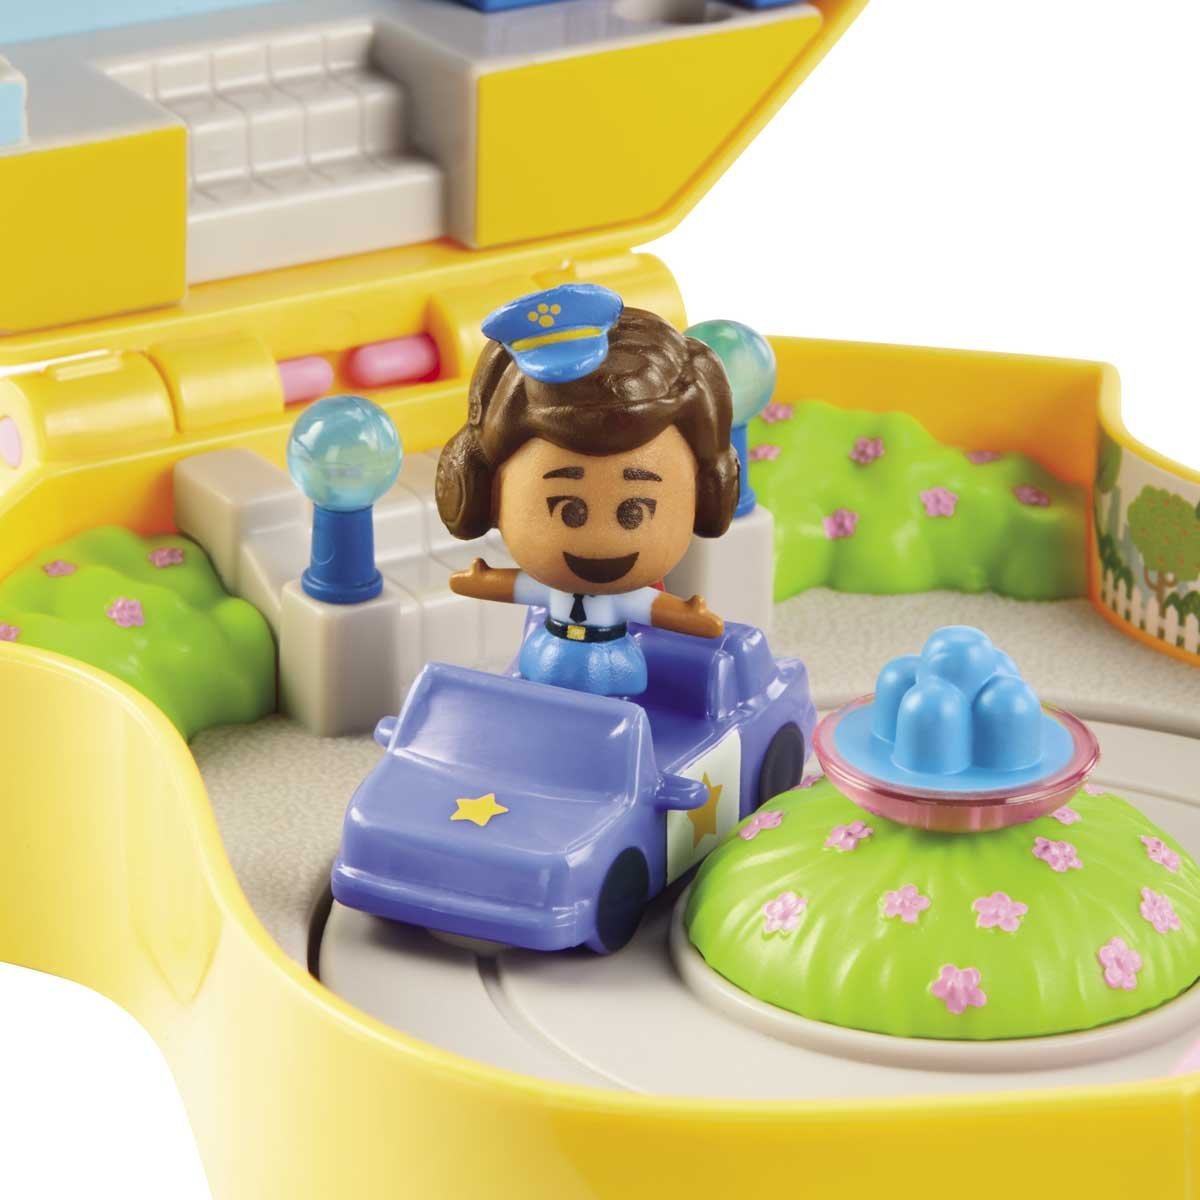 Toy Story Set de Juego de Giggle Mcdimpples Mattel